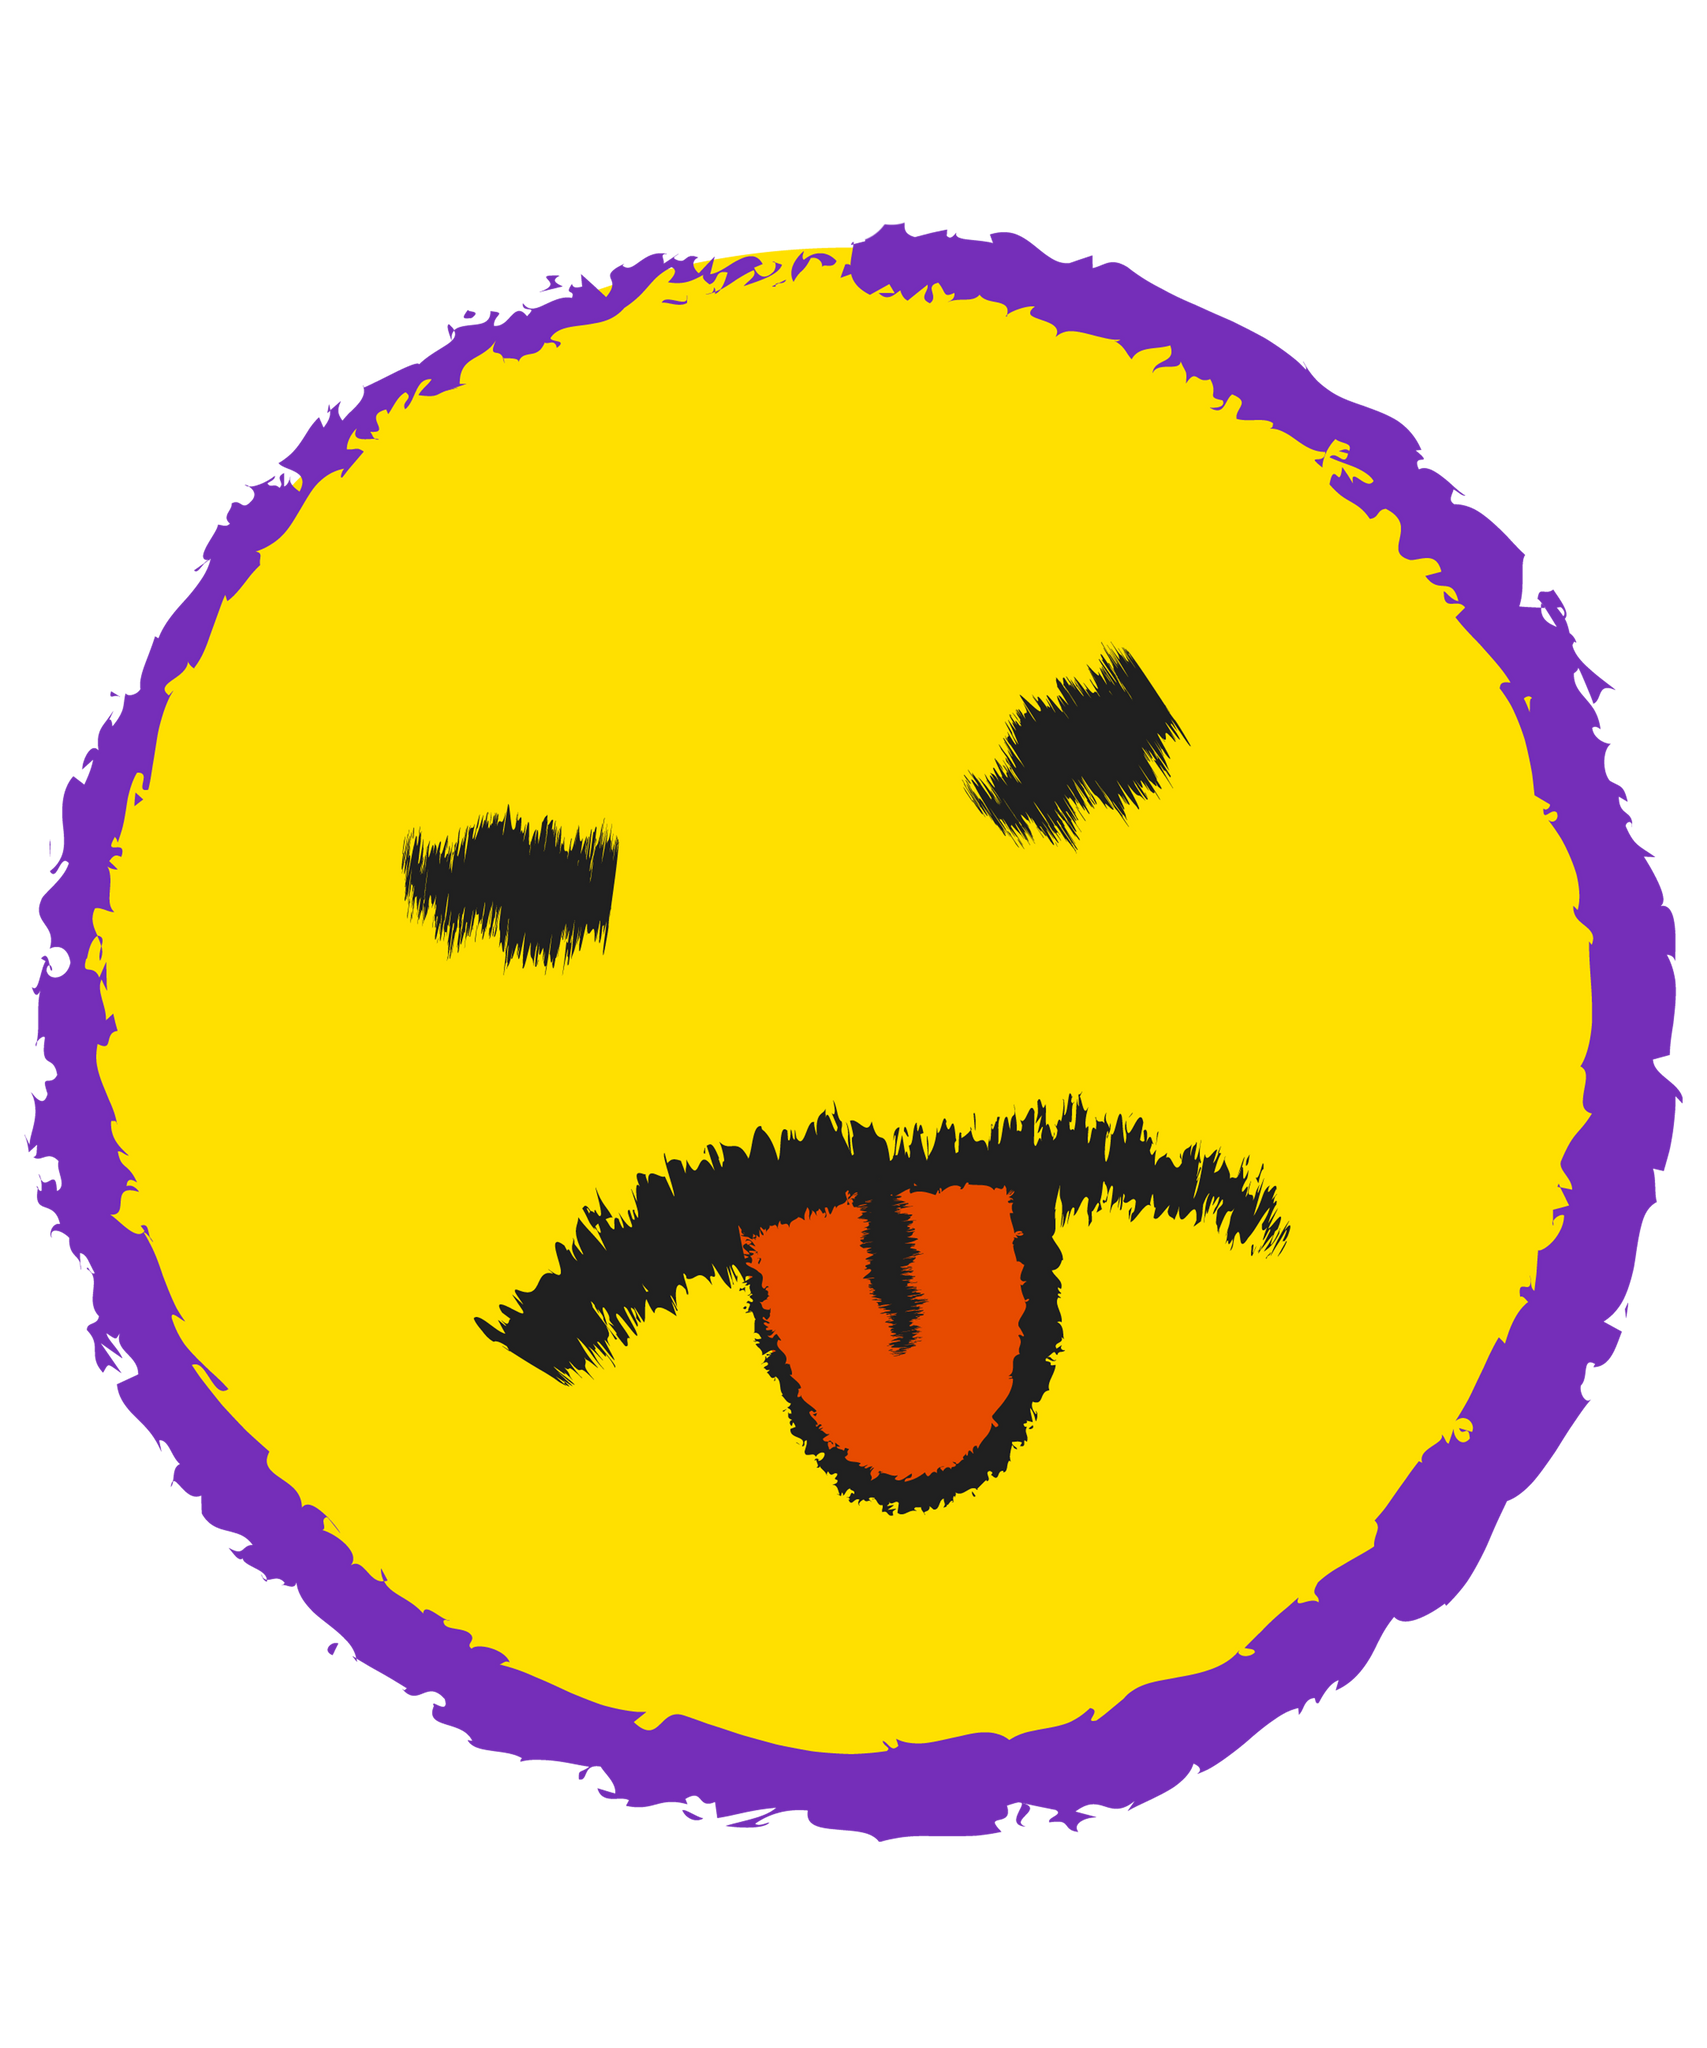 PBCZ1084_Yuckface_Icon_6_purple_outline